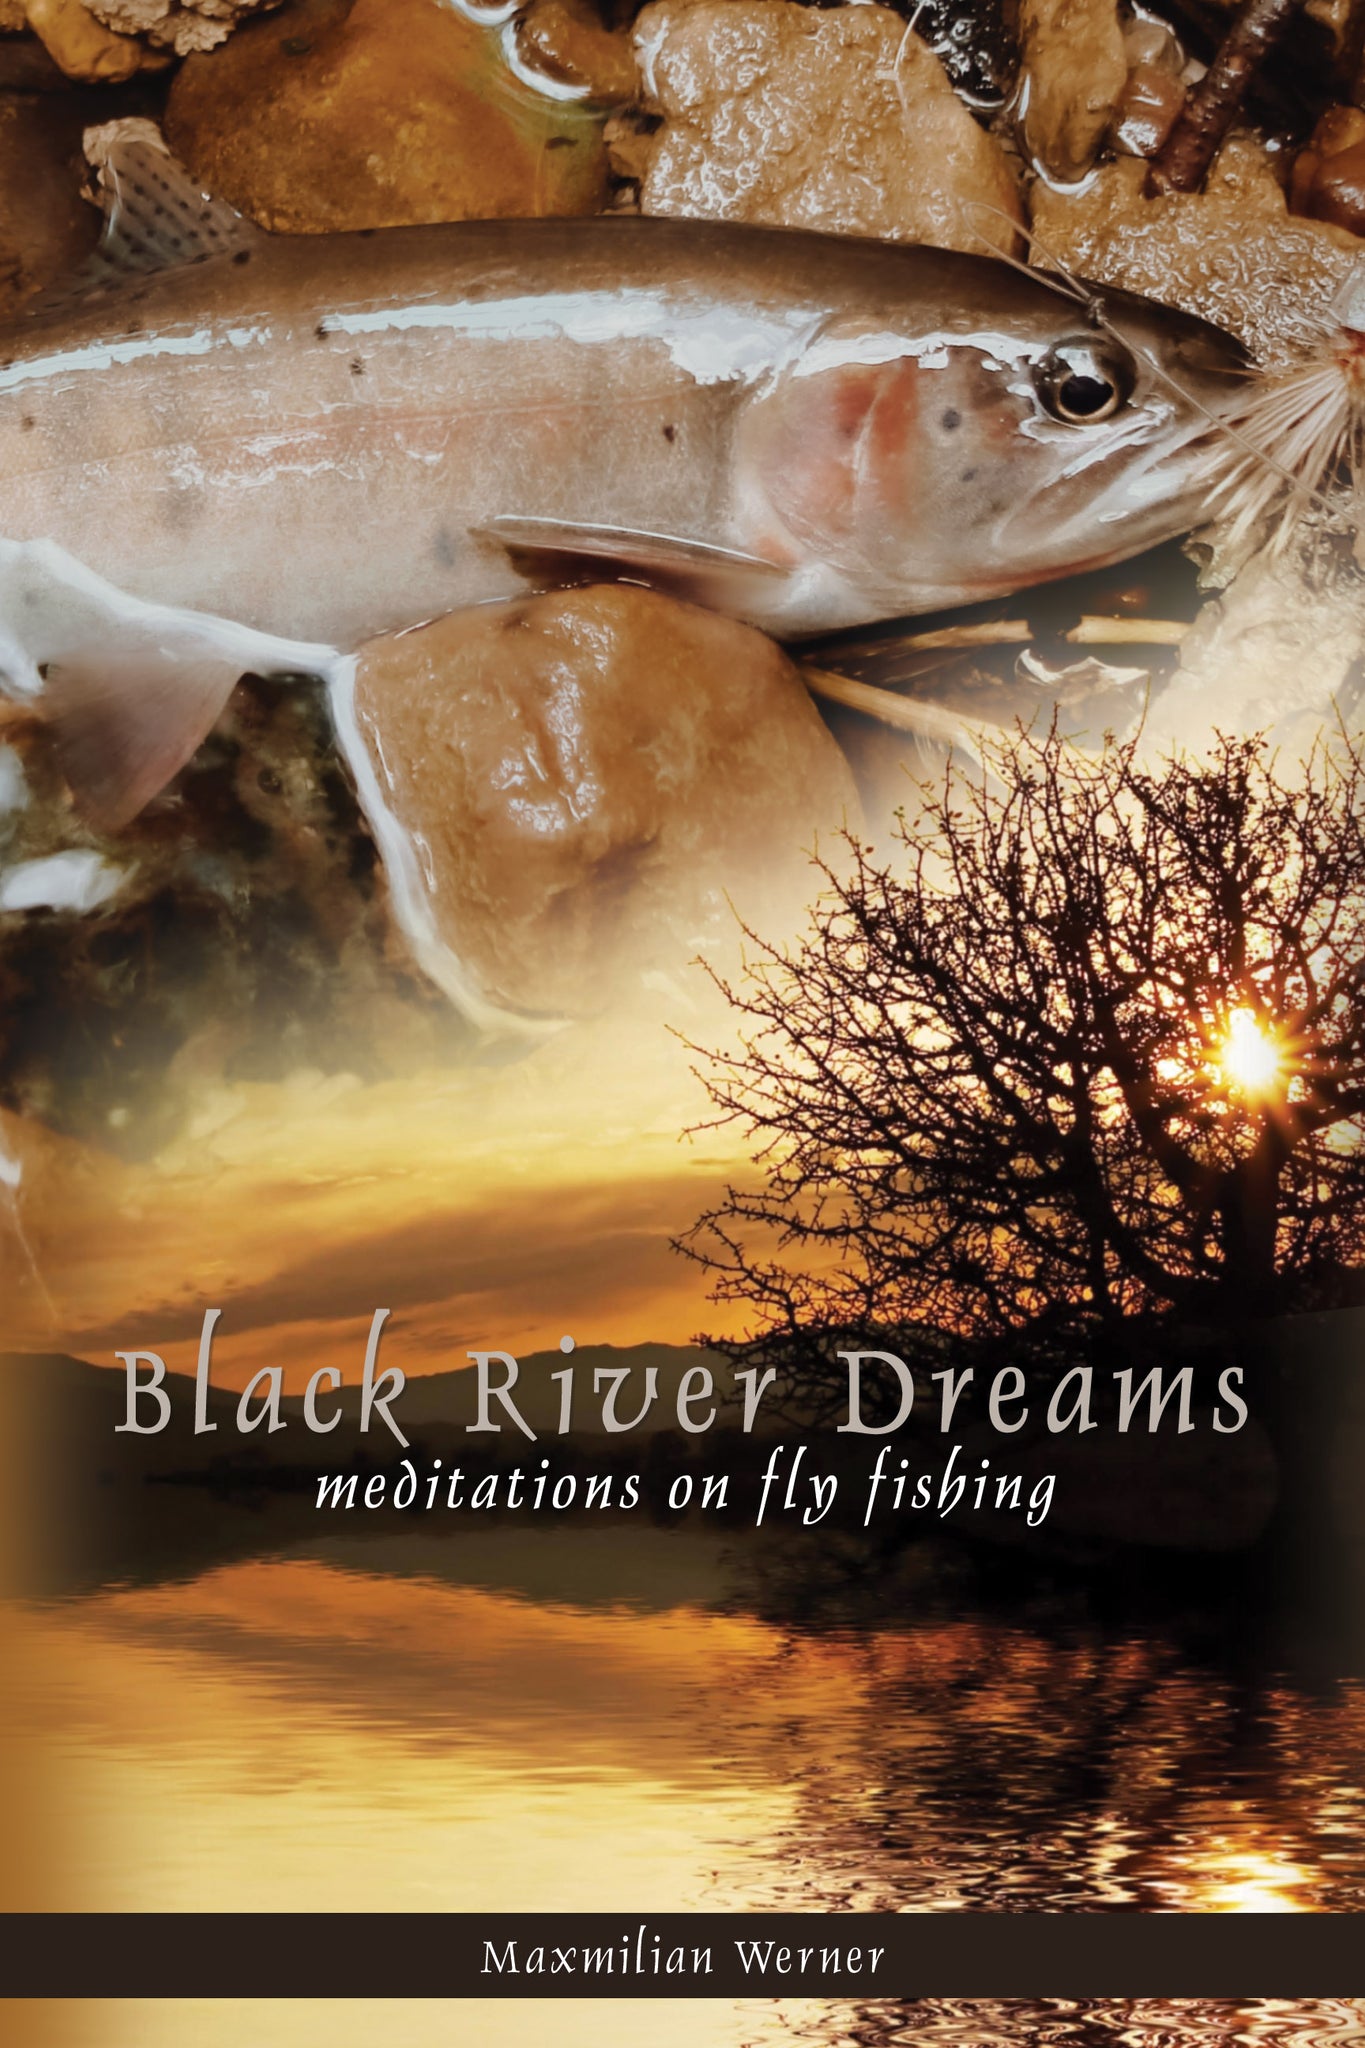 Black River Dreams: meditations on fly fishing